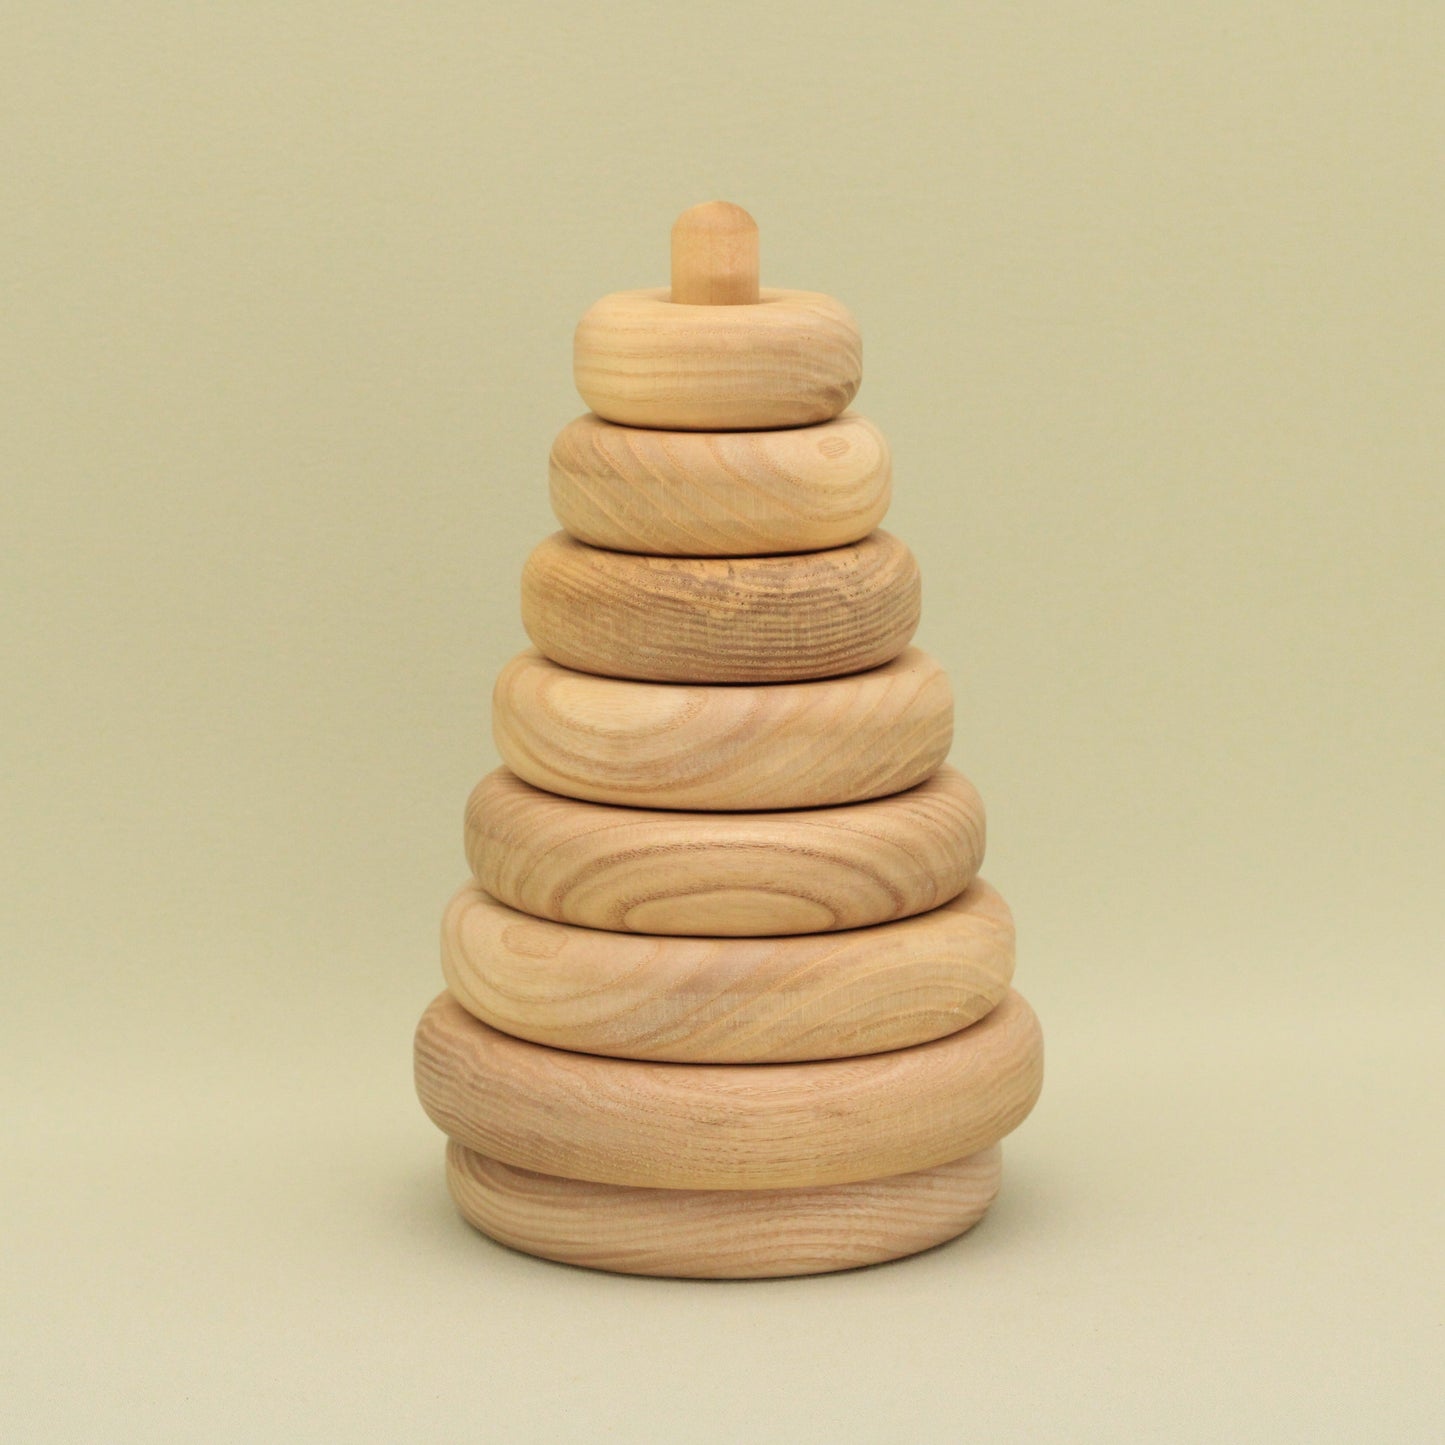 Lotes Toys Natural Circle Rings Wooden Stacking Pyramid - 7 pieces PY52